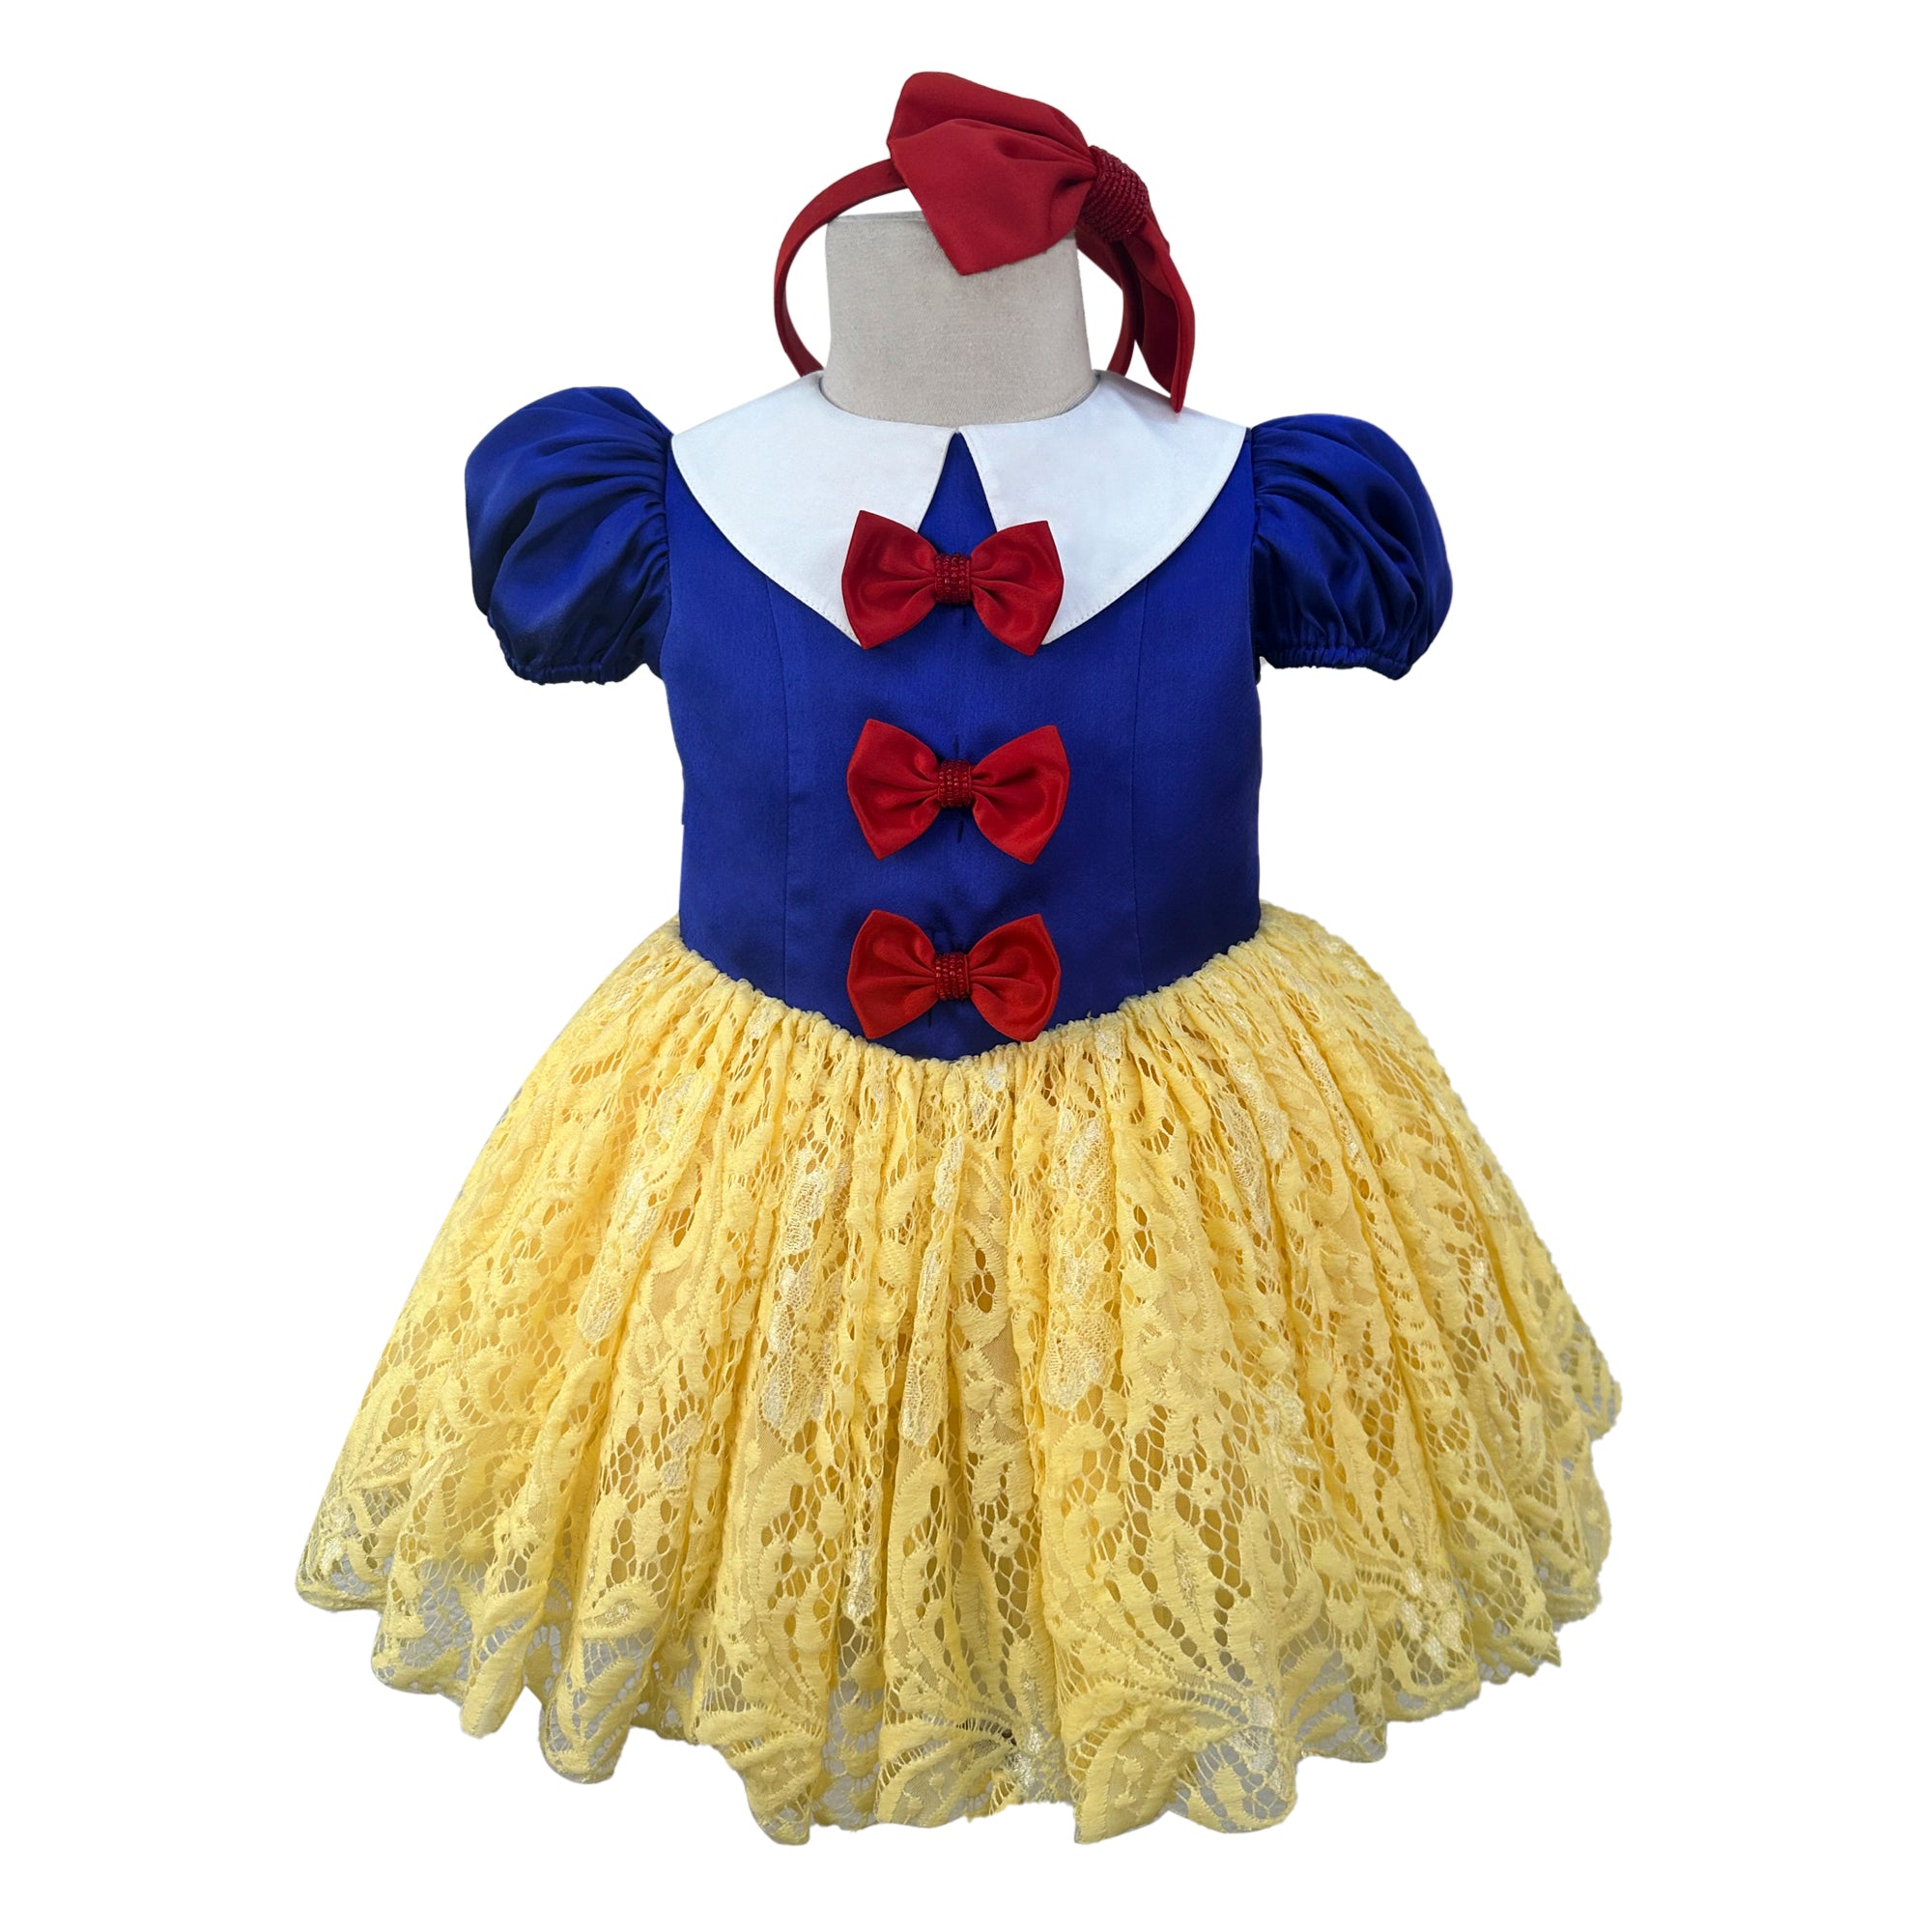 The Snow White Dress